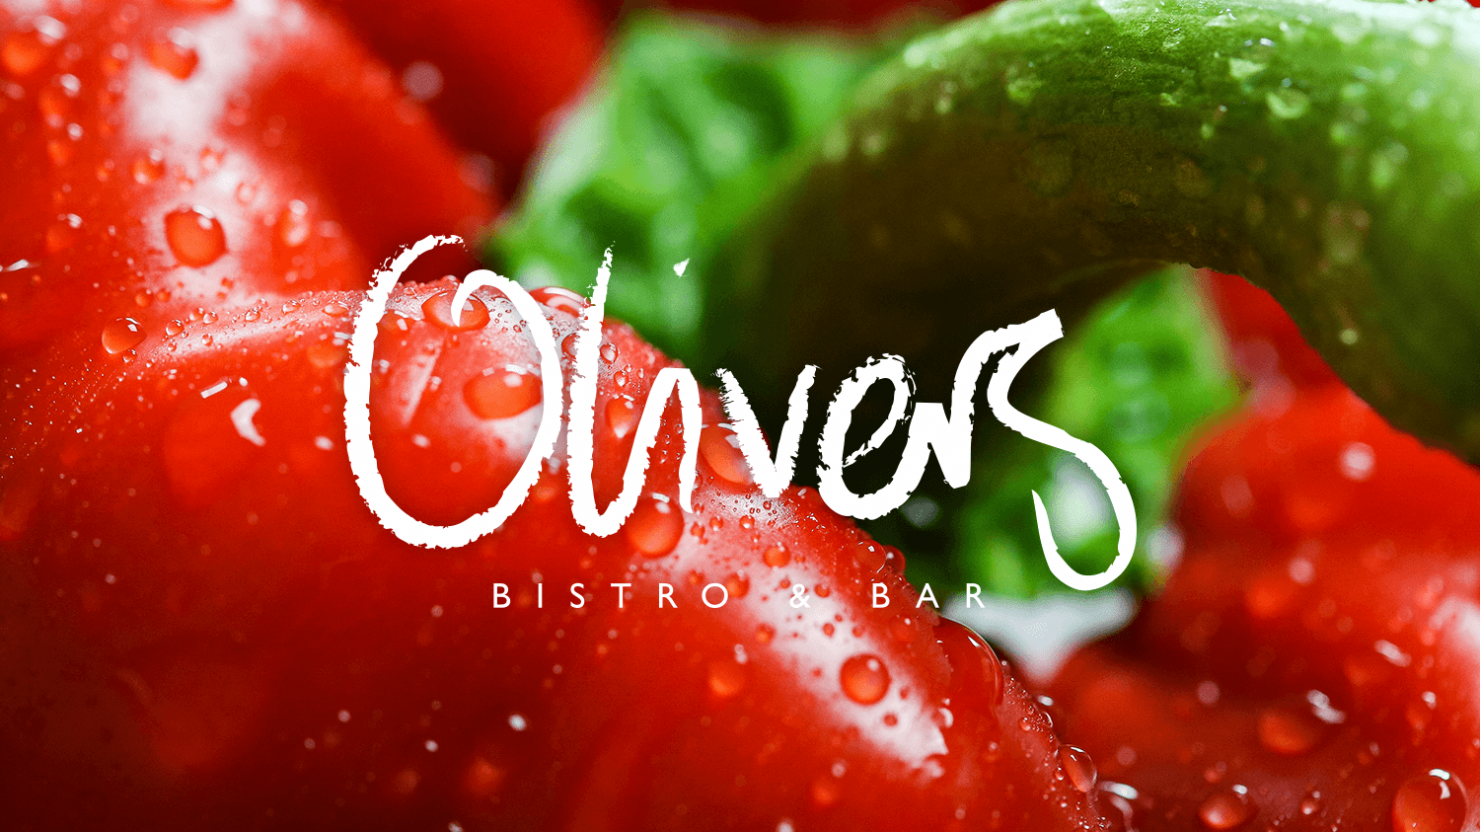 Logo design for Olivers bistro and bar restaurant branding in Solihull